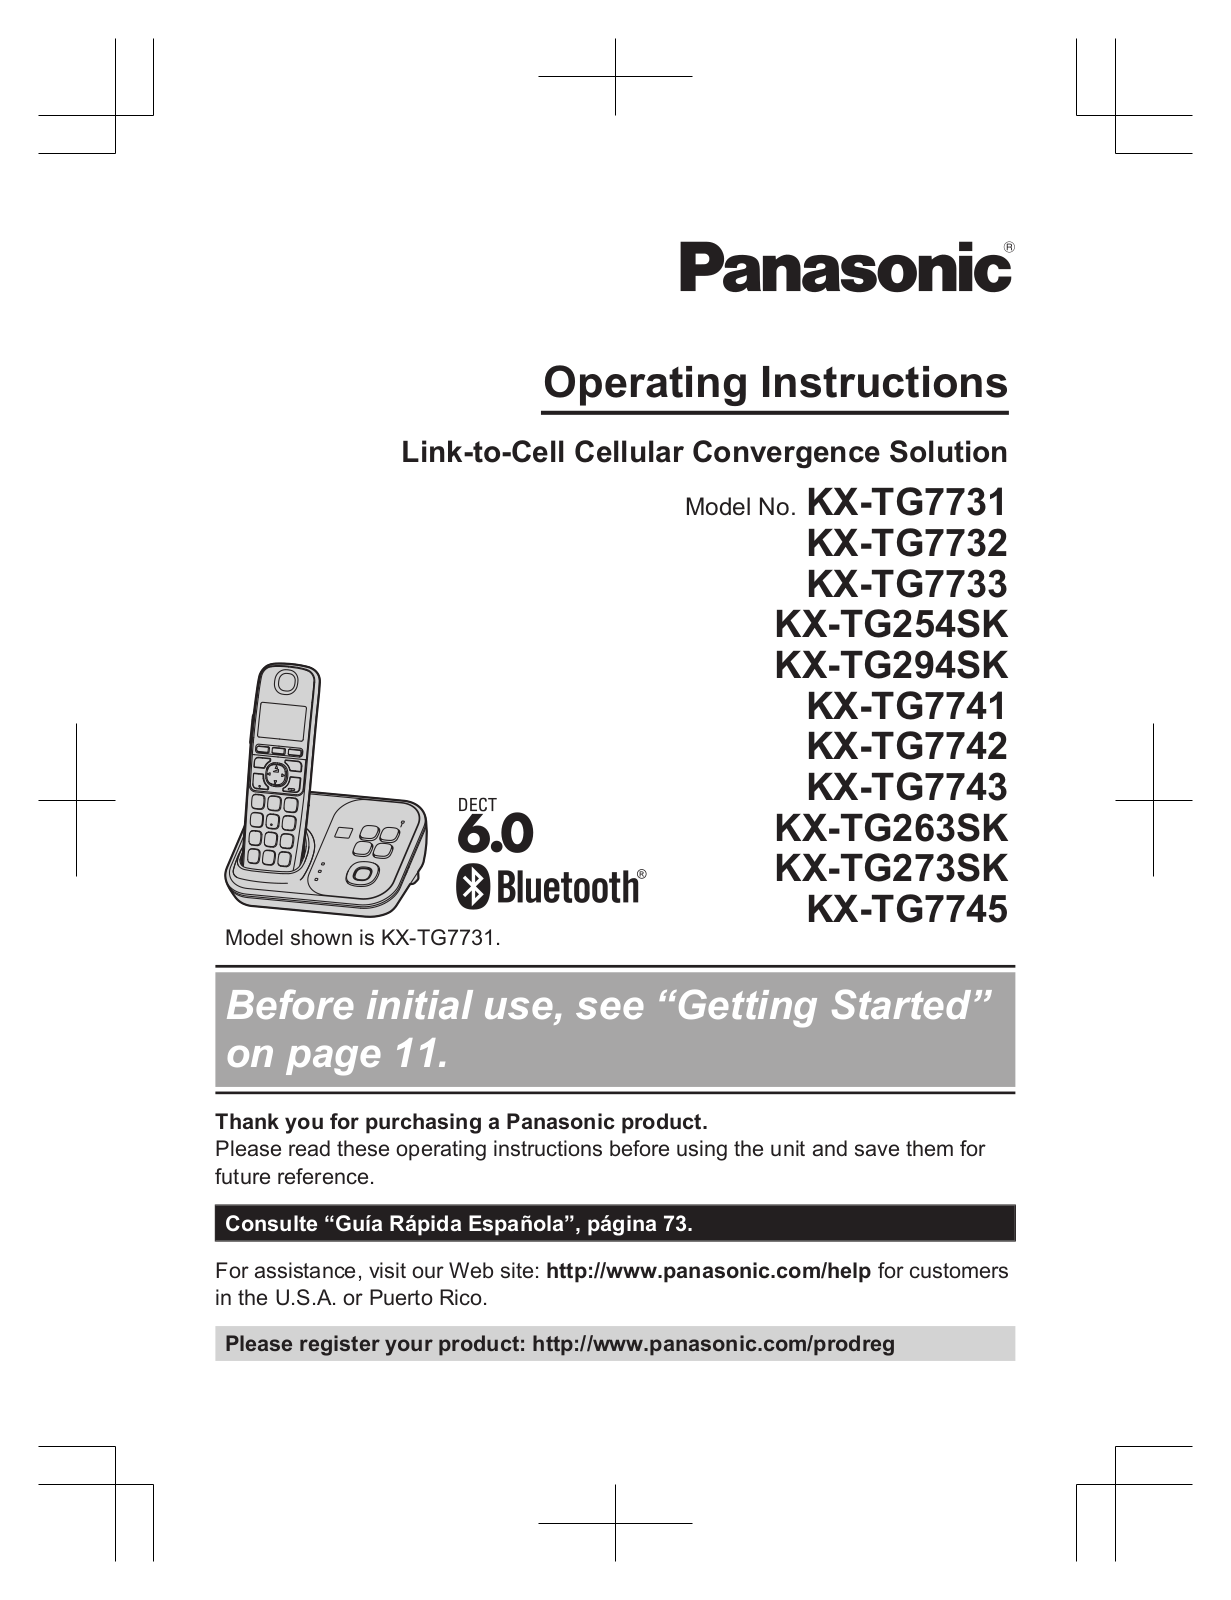 Panasonic KX-TG7743, KX-TG273SK, KX-TG263SK, KX-TG7742, KX-TG7745 User Manual